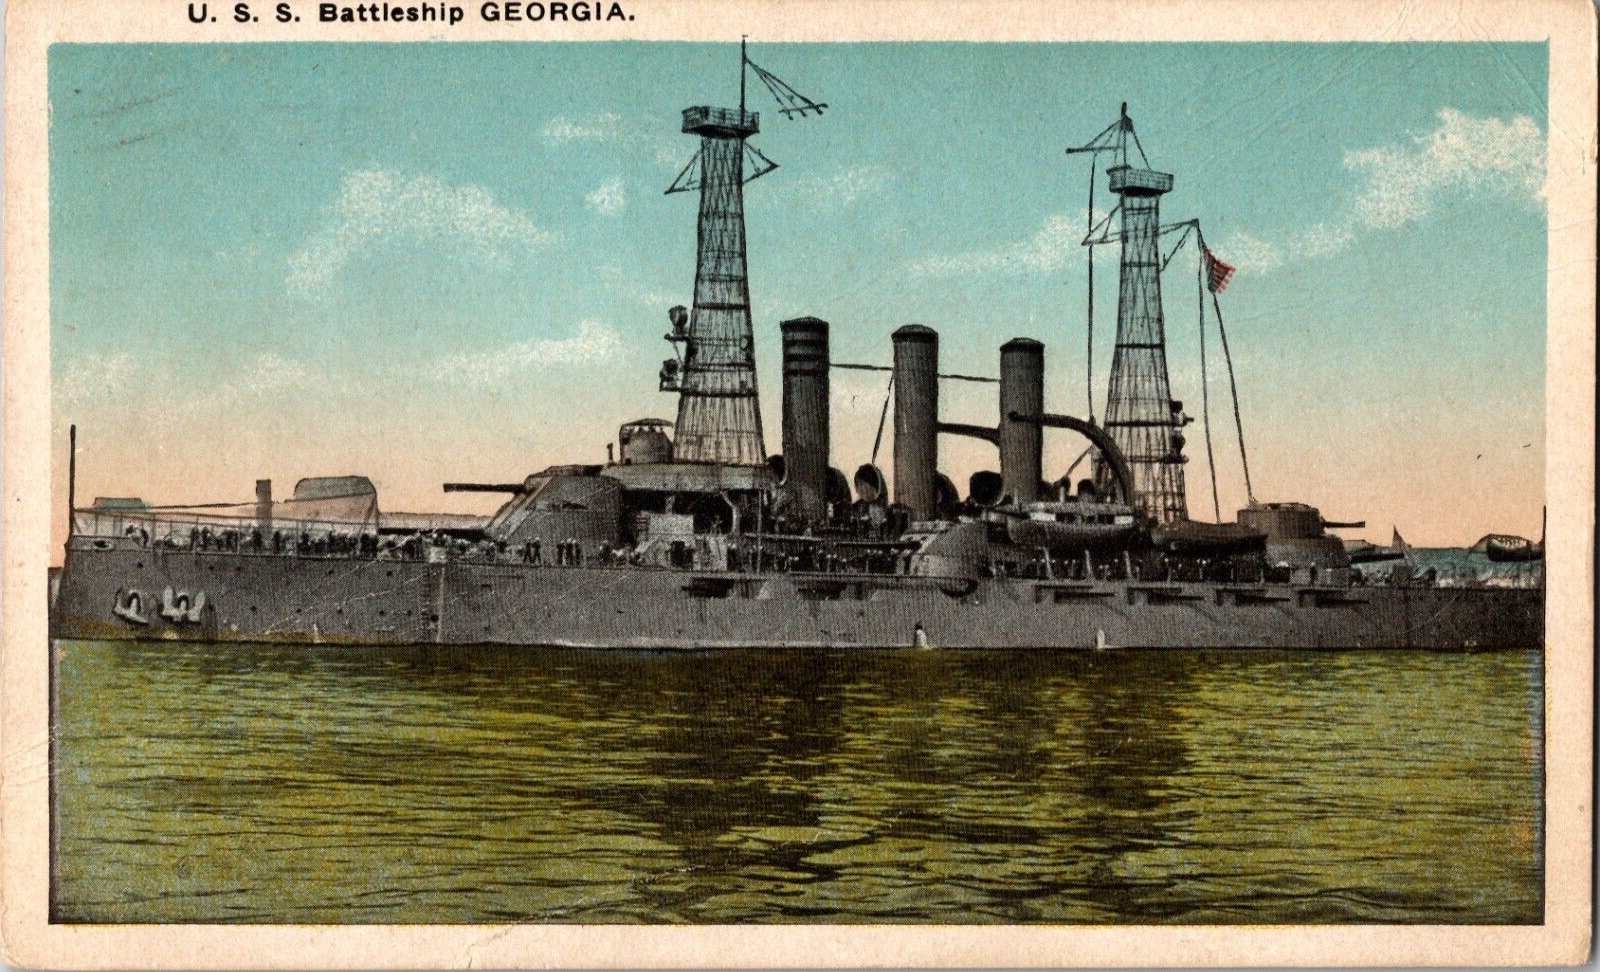 Primary image for Vtg Postcard U.S.S. Battleship Georgia, US Navy, Postmarked 1926